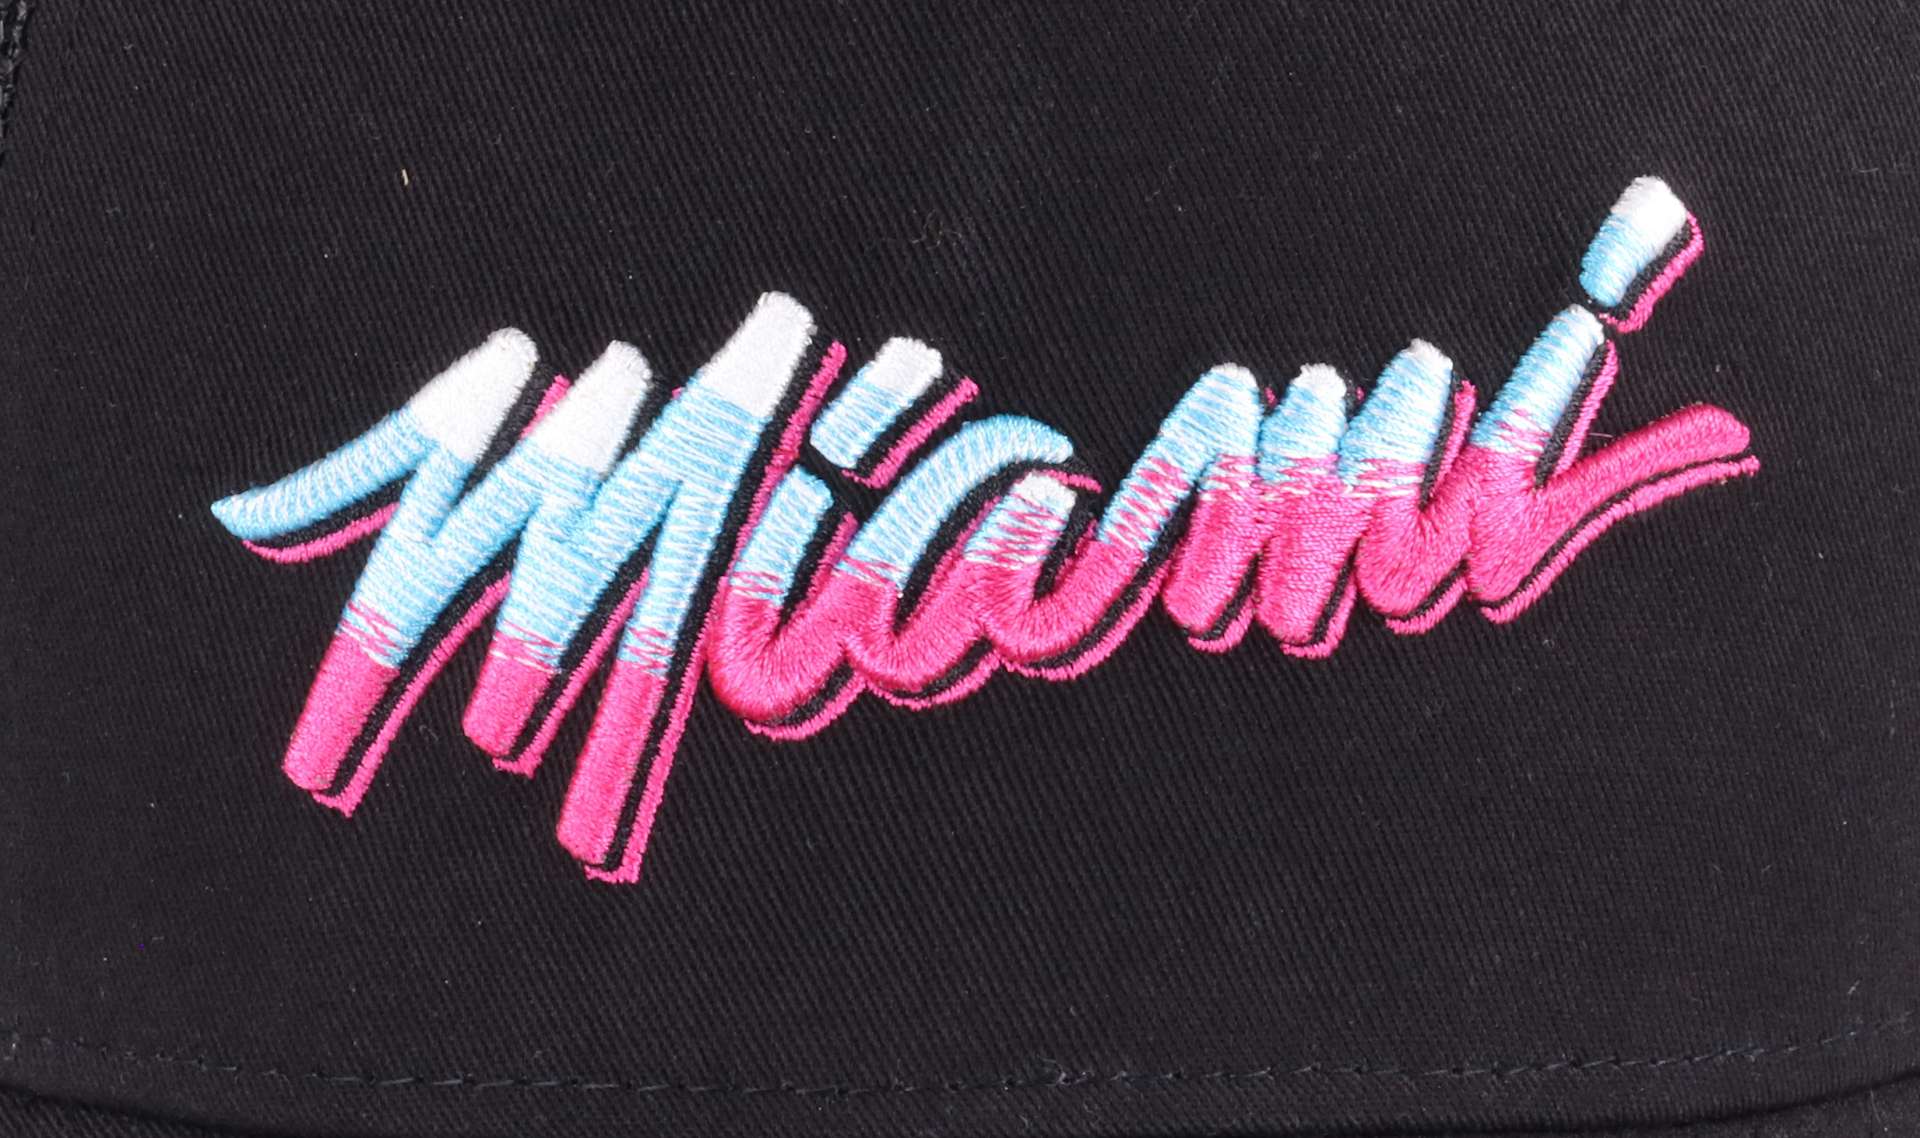 Miami Heat NBA Vice Collection Black Adjustable Trucker Cap New Era